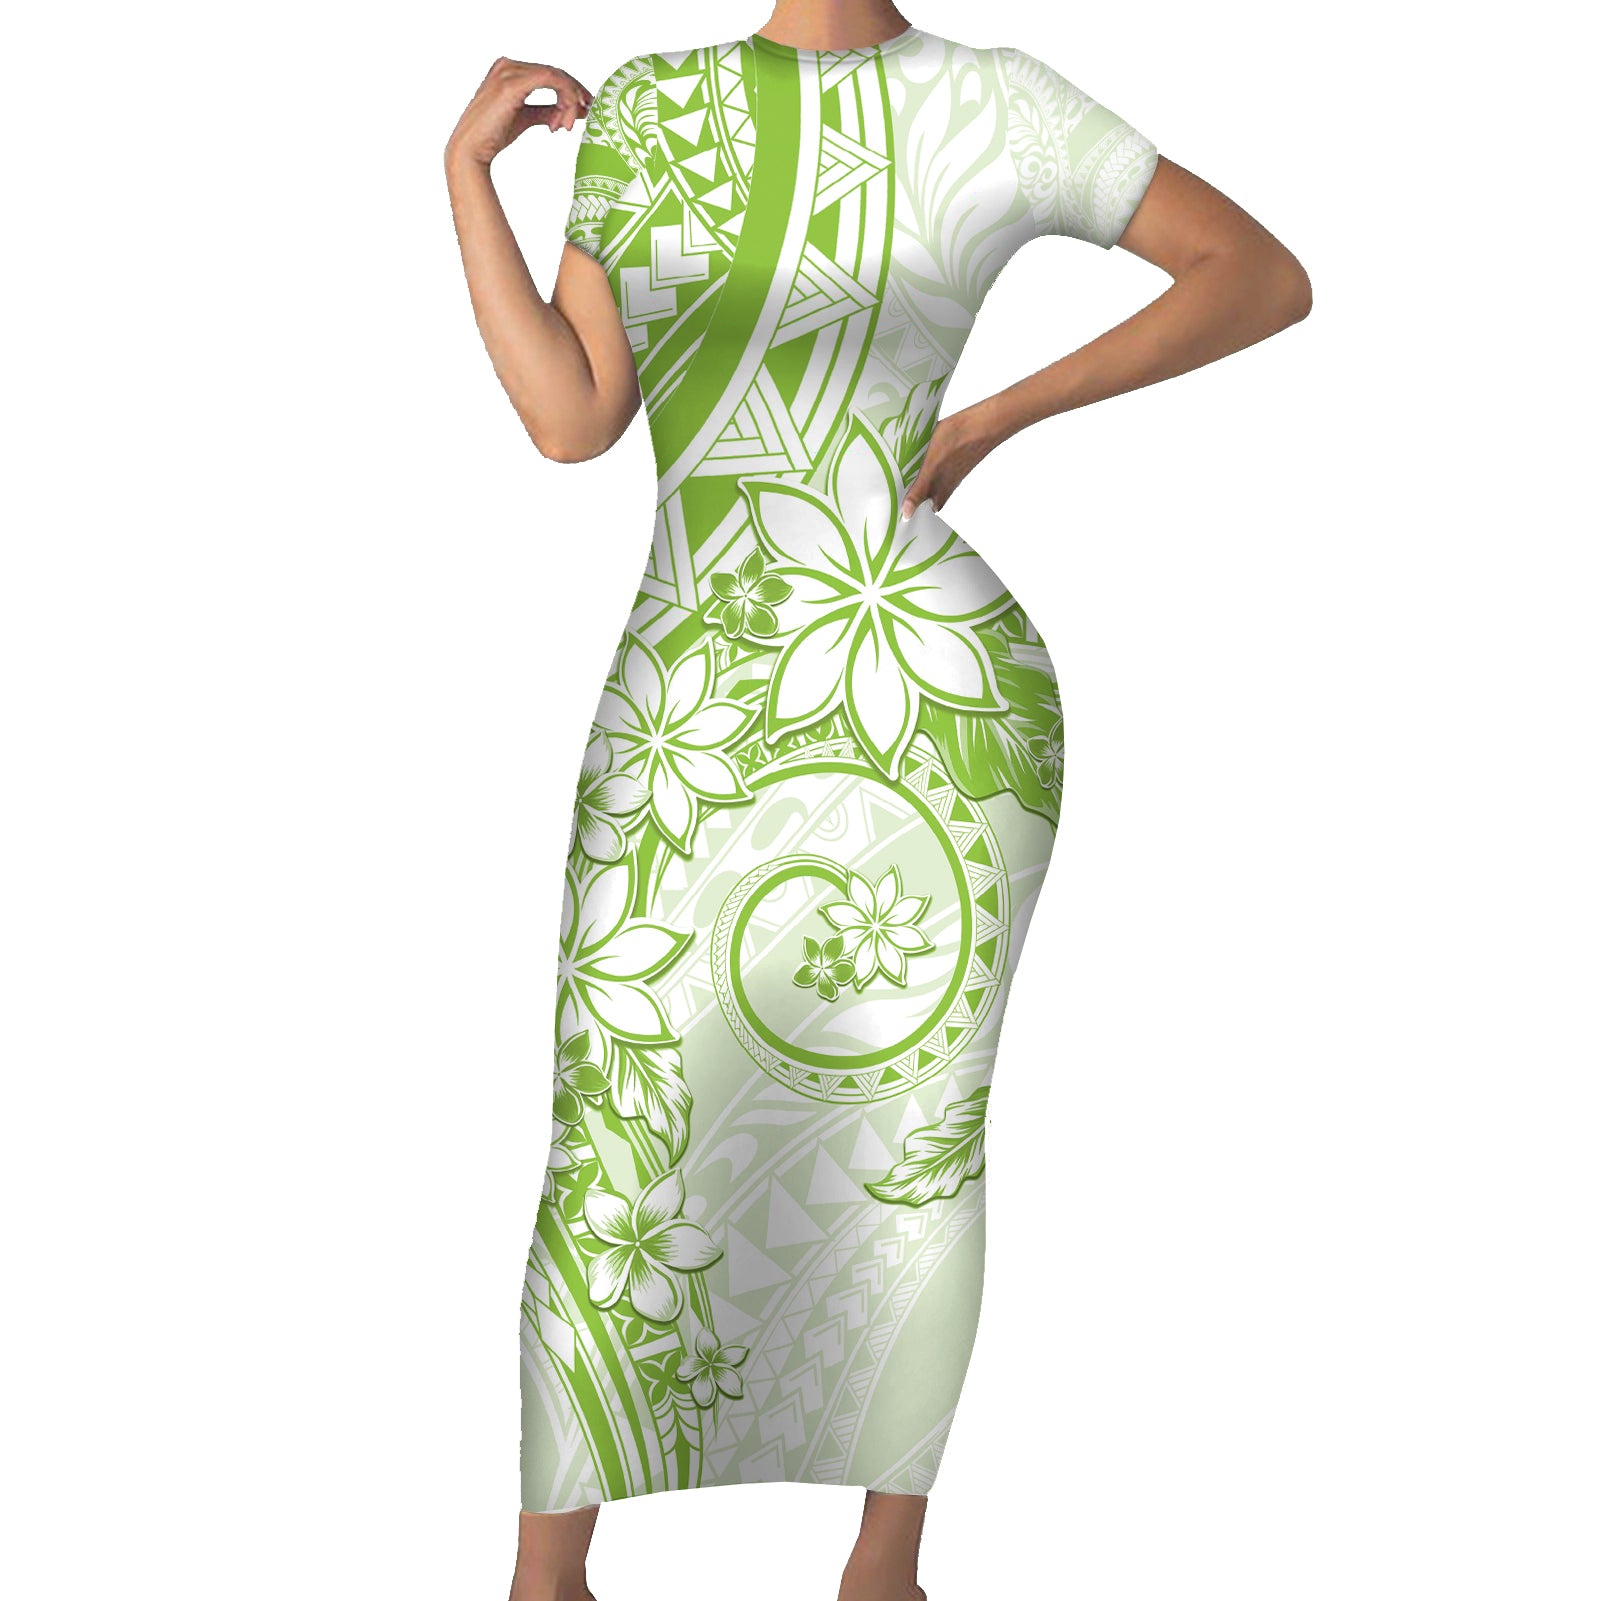 Polynesian Pattern With Plumeria Flowers Short Sleeve Bodycon Dress Lime Green